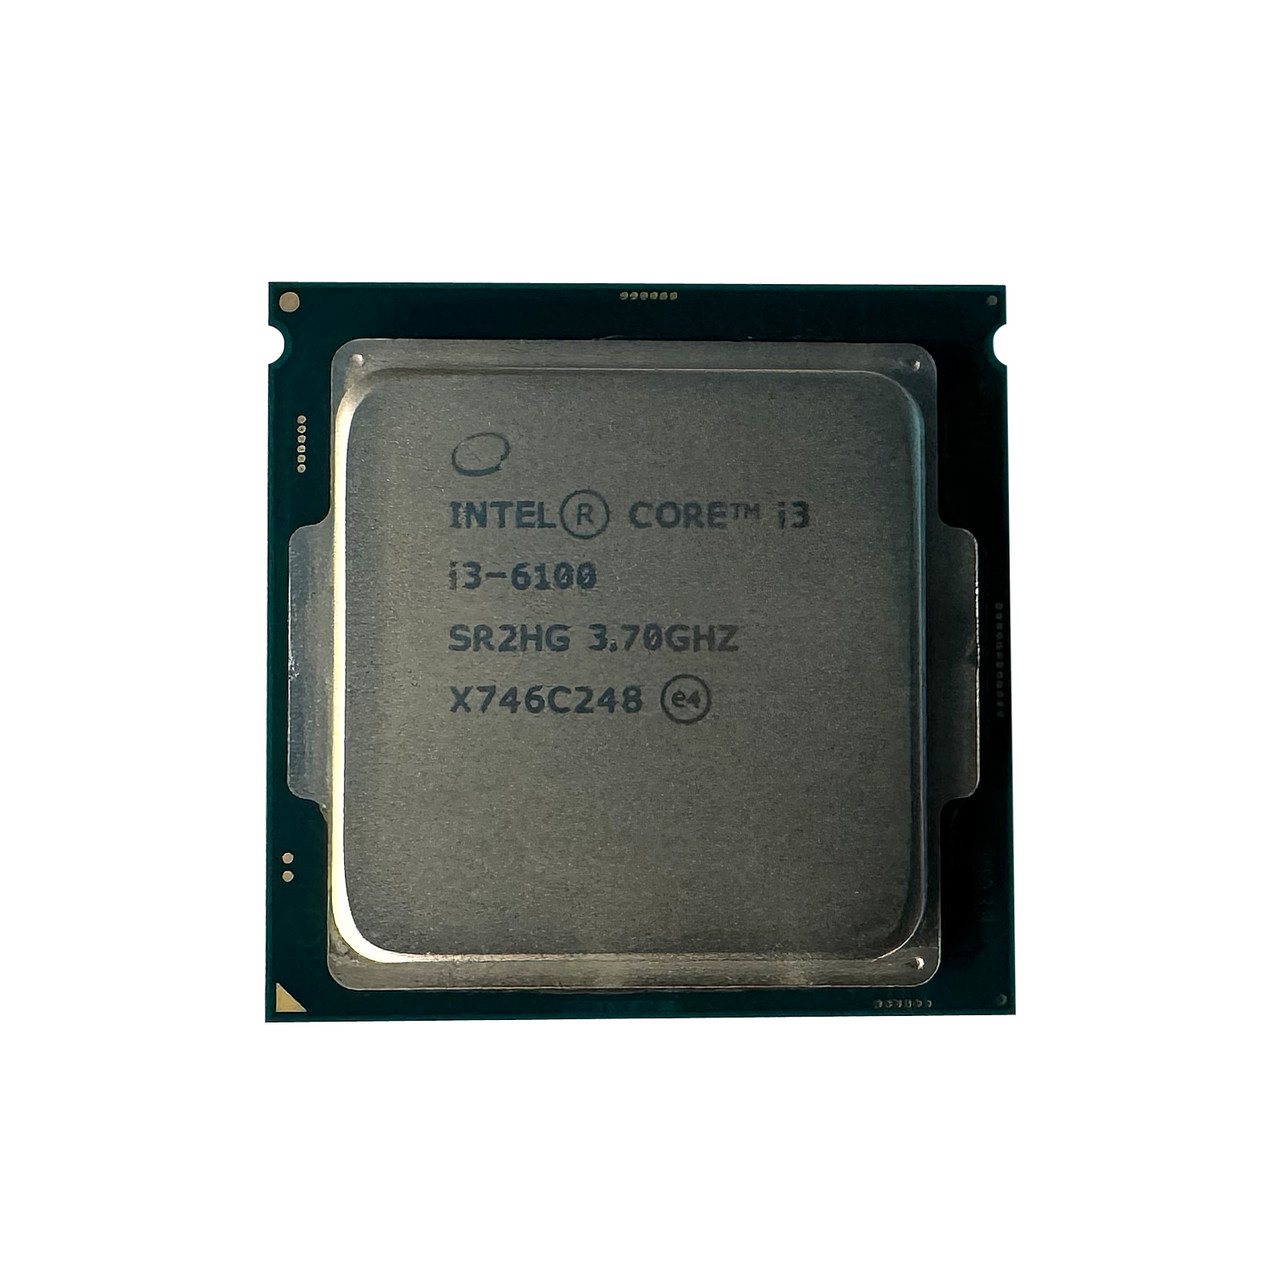 Dell FY4X6 i3-6100 DC 3.70Ghz 3MB 8GTs Processor